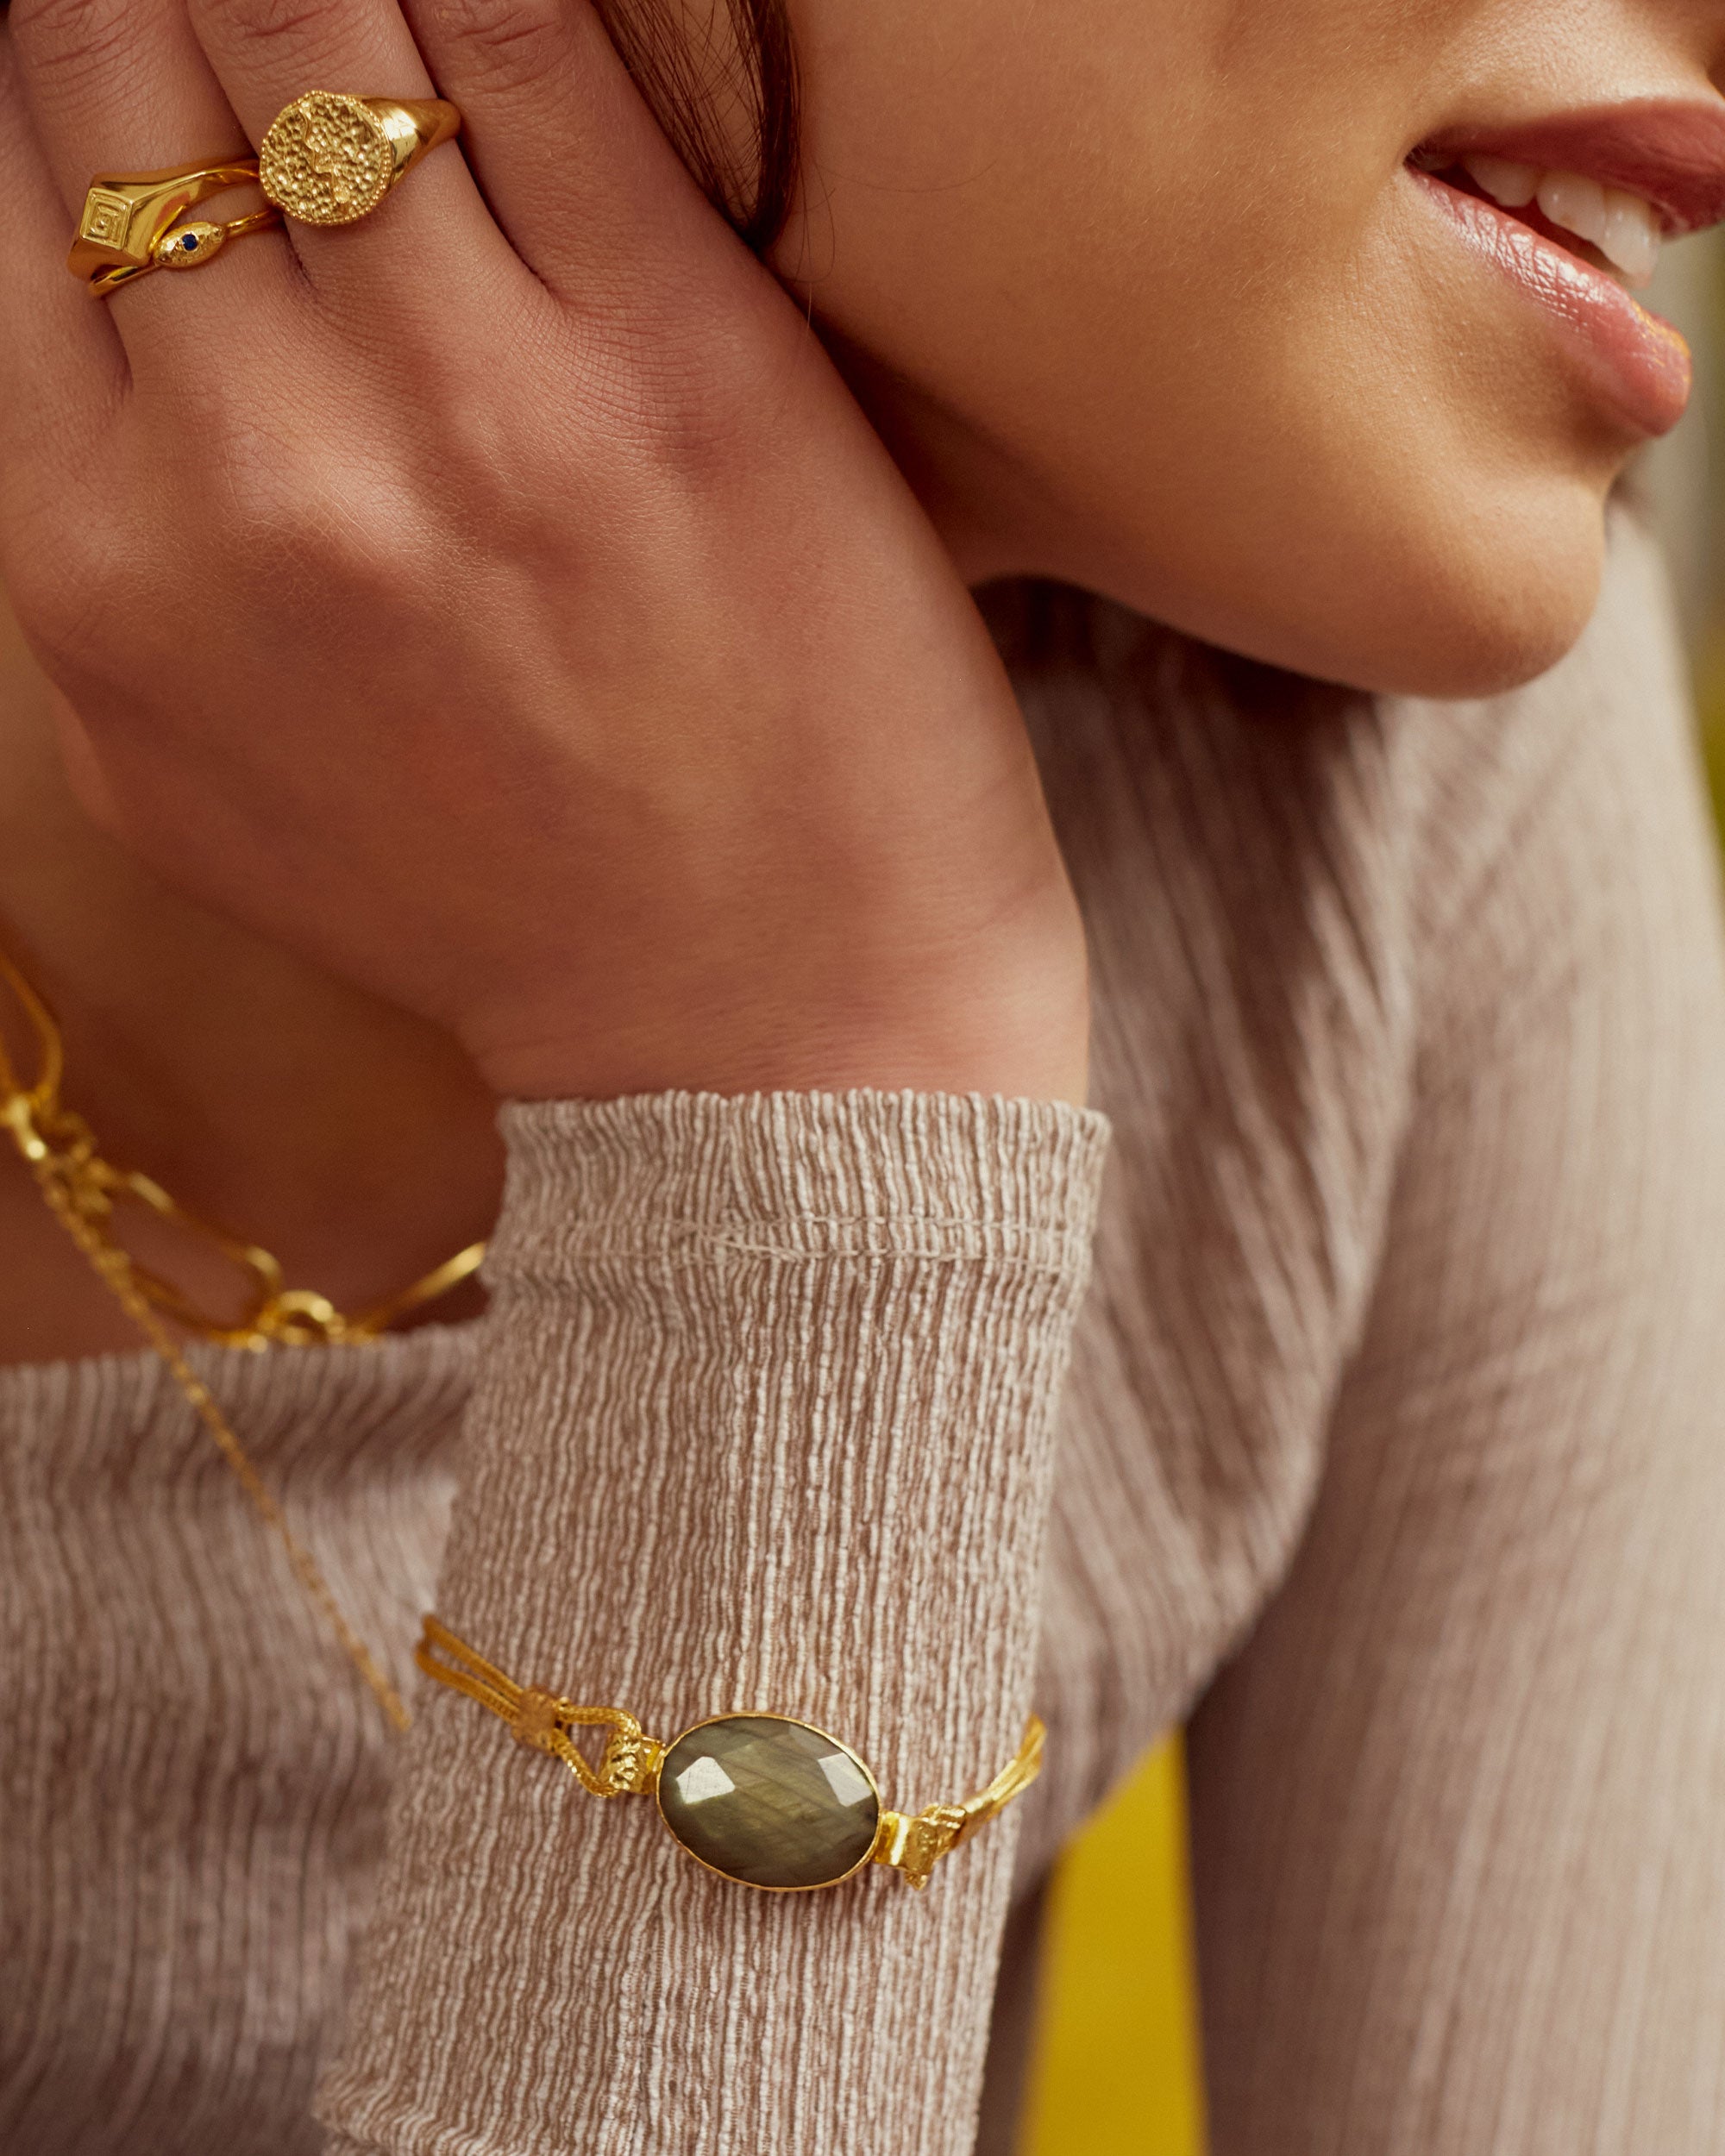 Daphne Labradorite Chain Bracelet | Sustainable Jewellery by Ottoman Hands